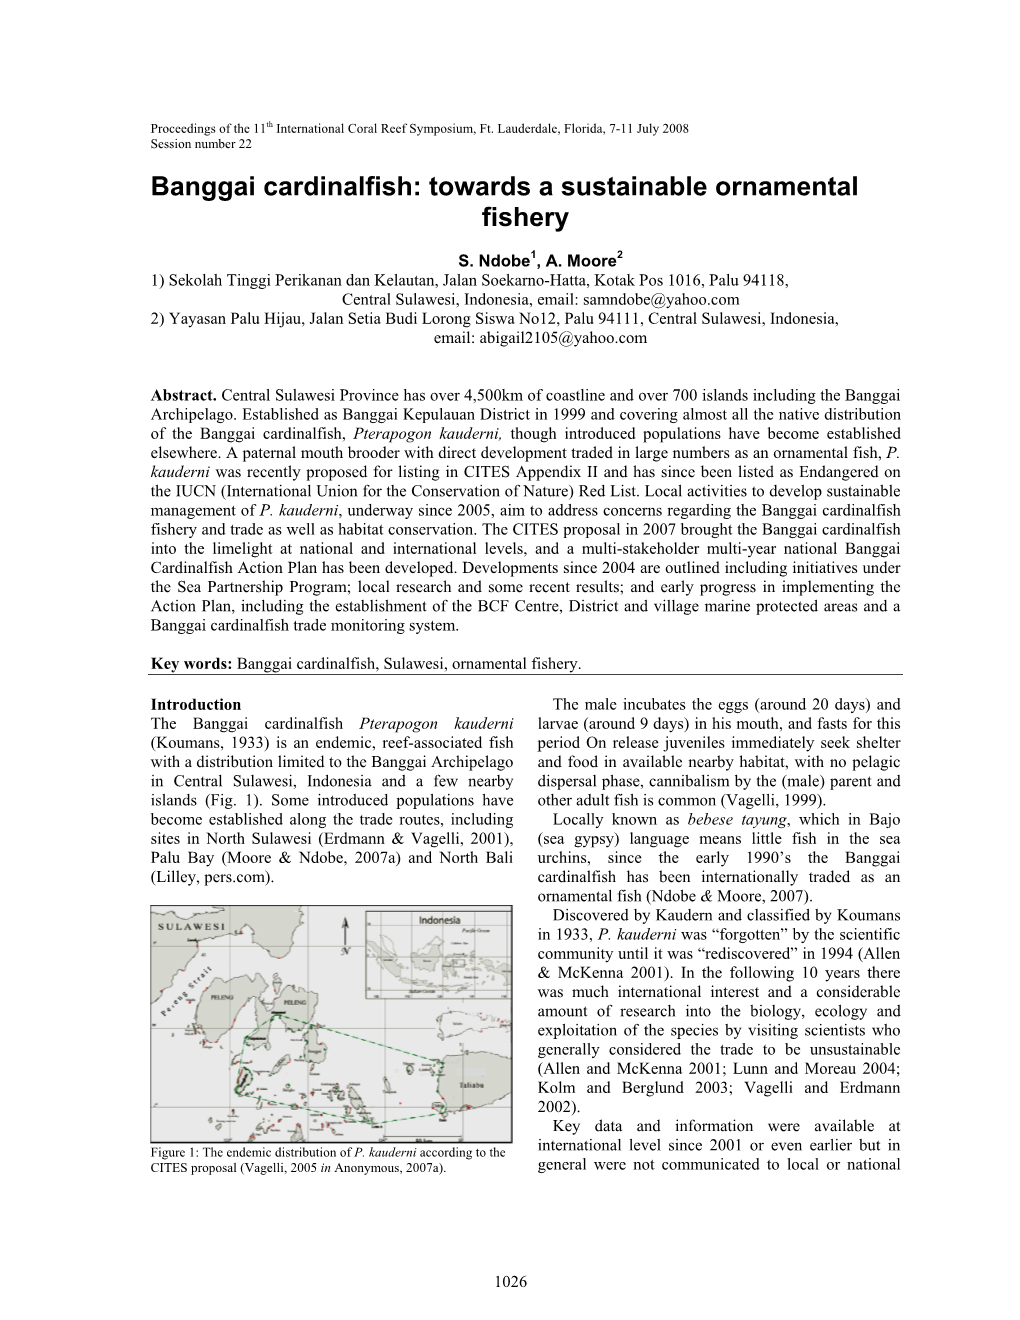 Banggai Cardinalfish: Towards a Sustainable Ornamental Fishery